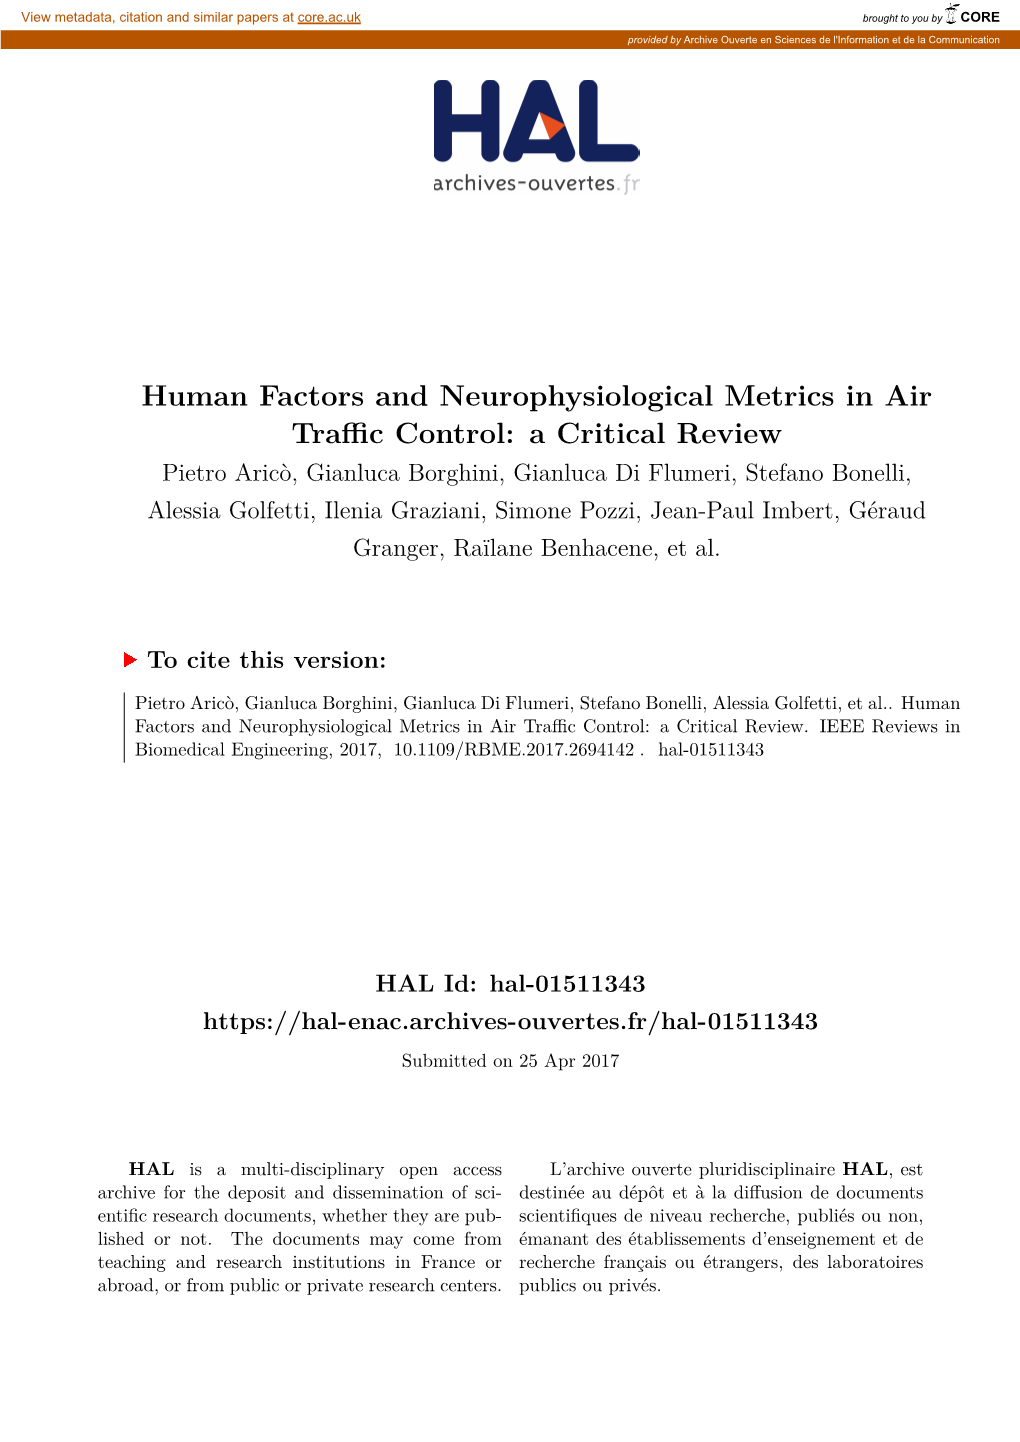 Human Factors and Neurophysiological Metrics